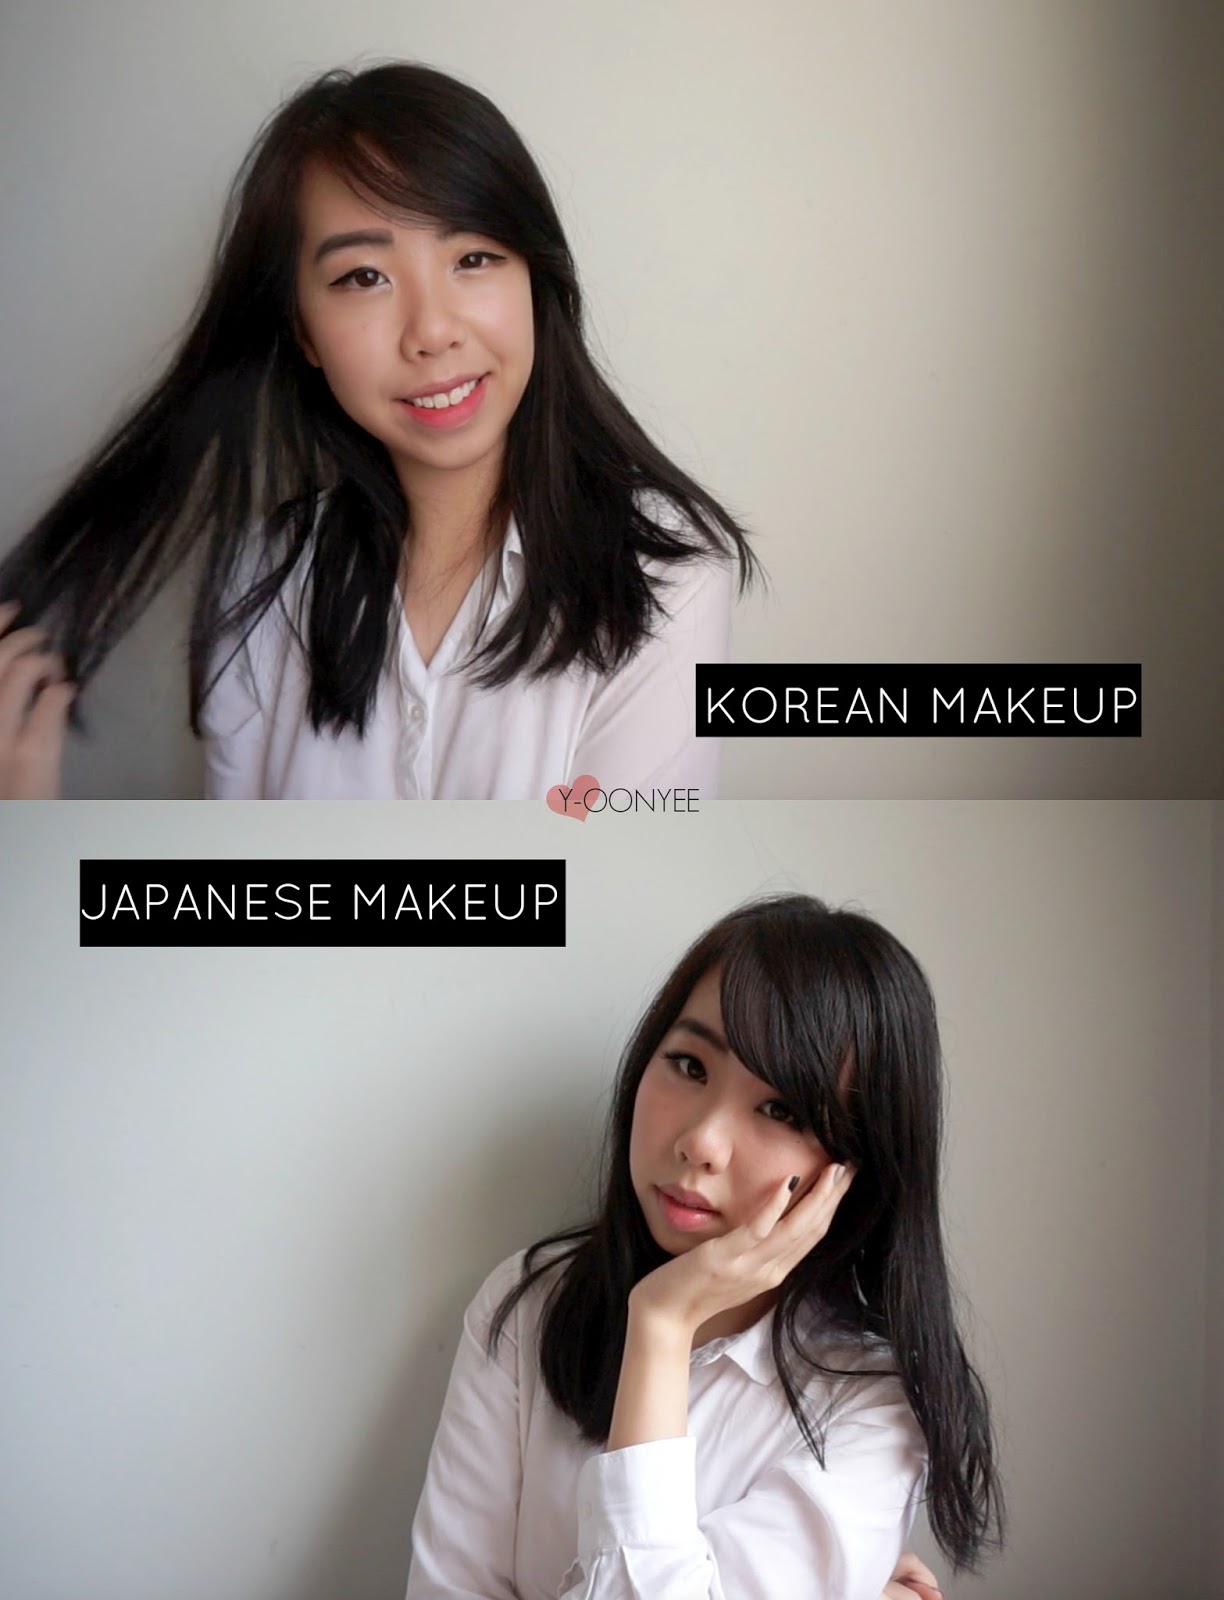 Korean Vs Japanese Makeup BEFORE AND AFTER MAKEUP TRANSFORMATION